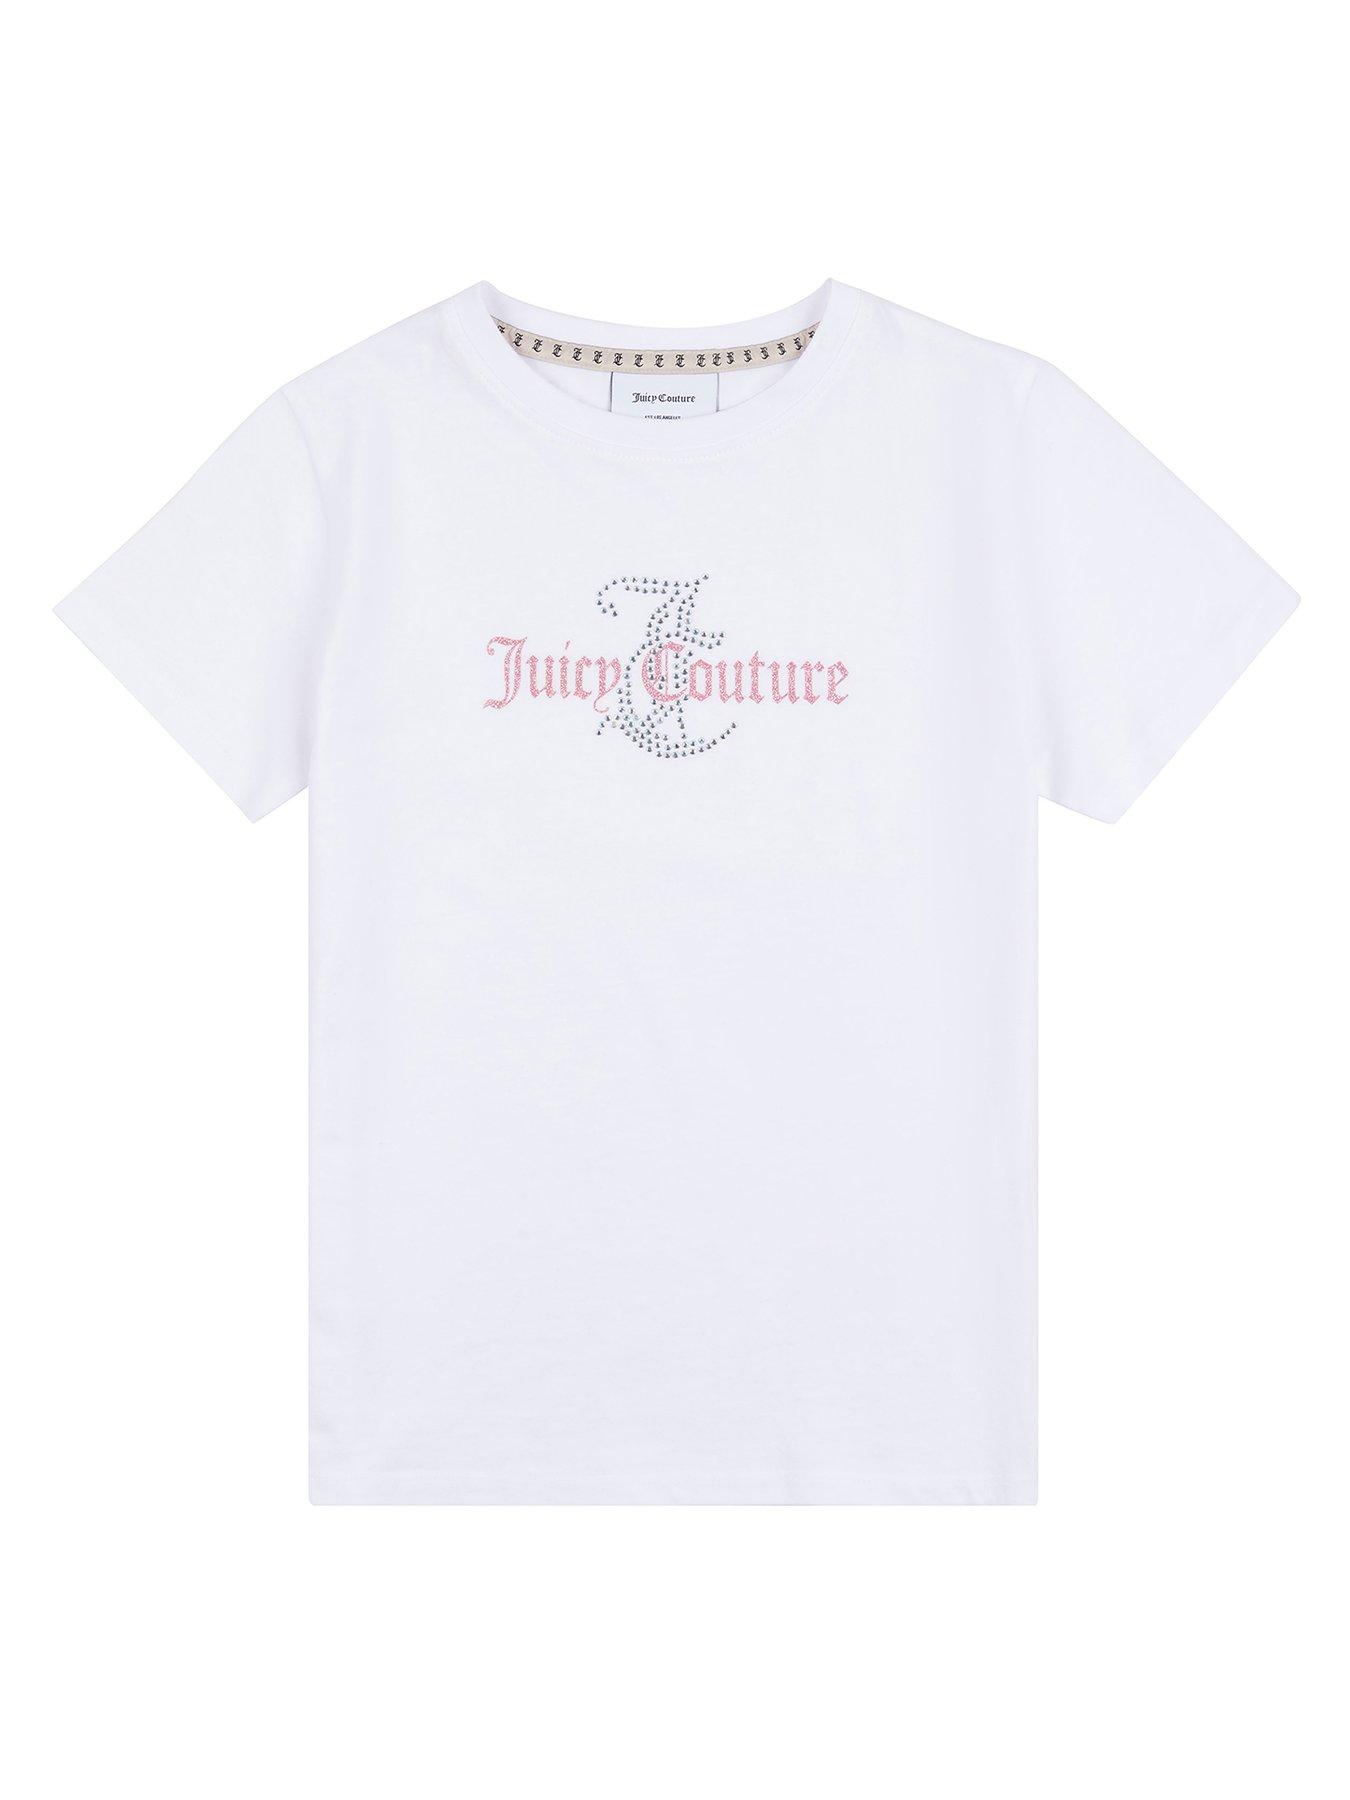 Buy Juicy Couture Women's Cotton Logo Bra, Light Grey Heather, Medium at